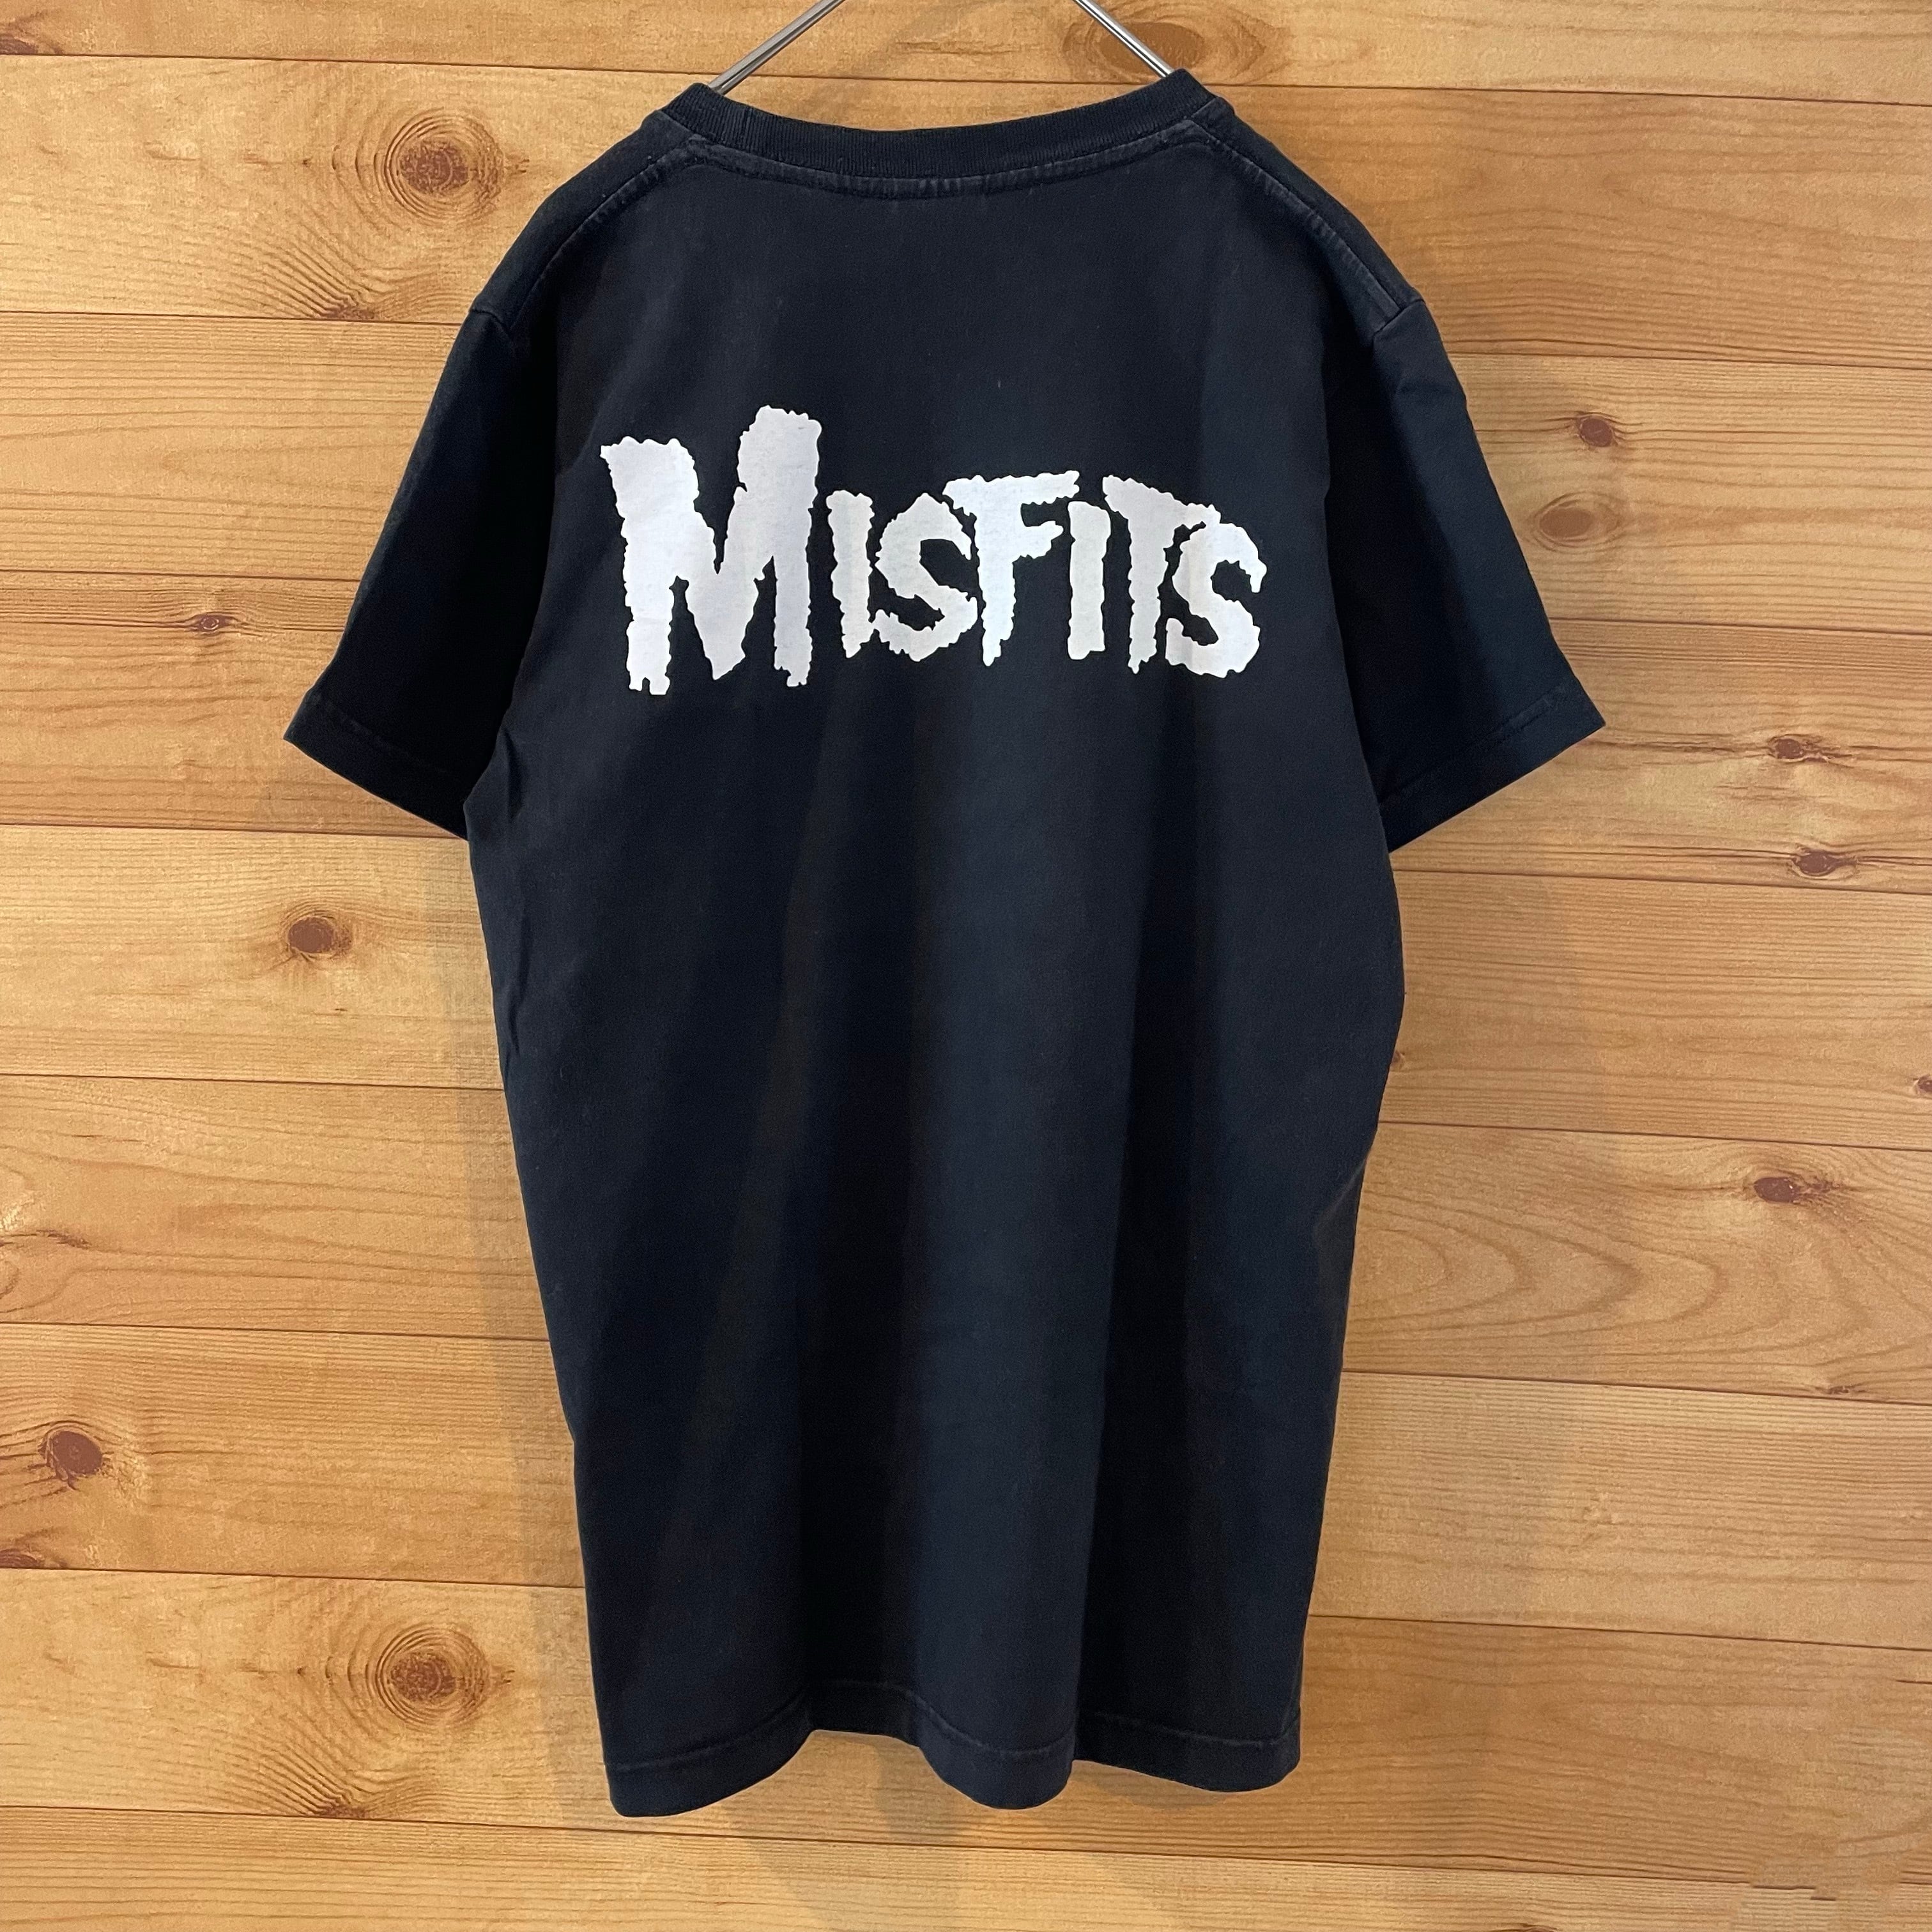 againstバンドTシャツ Misfits ミスフィッツ バンt ロックTシャツ US